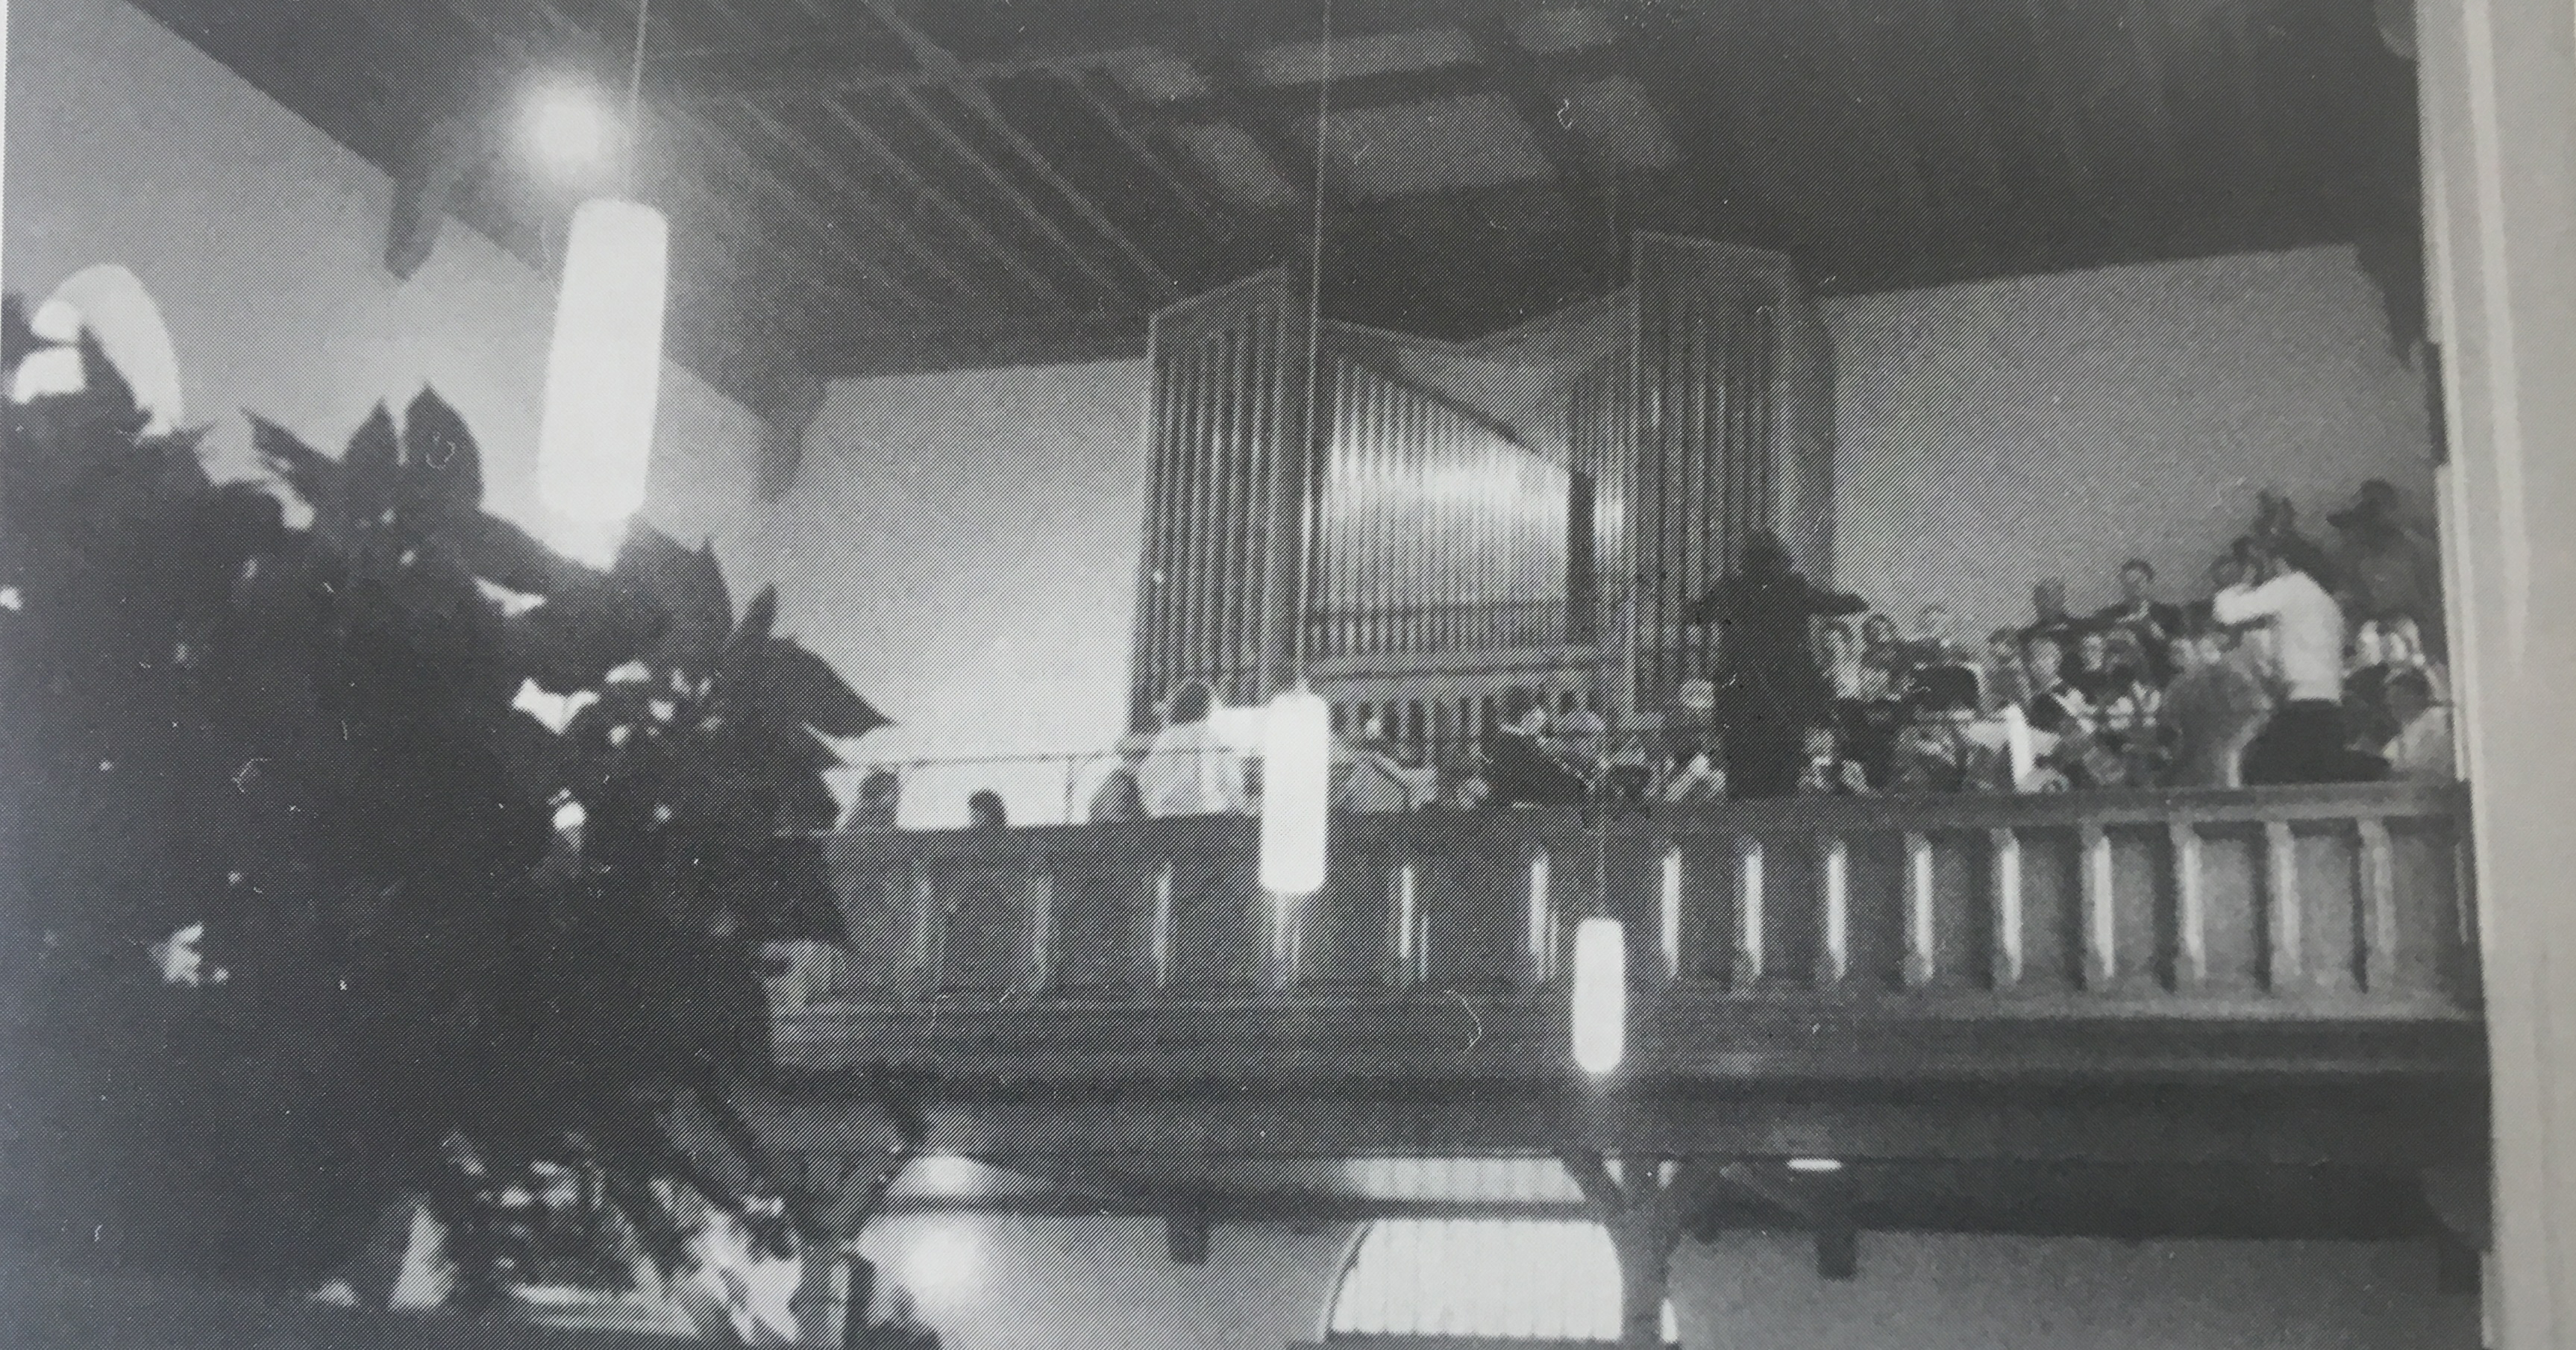 Späth-Orgel, St. Johannes Backnang